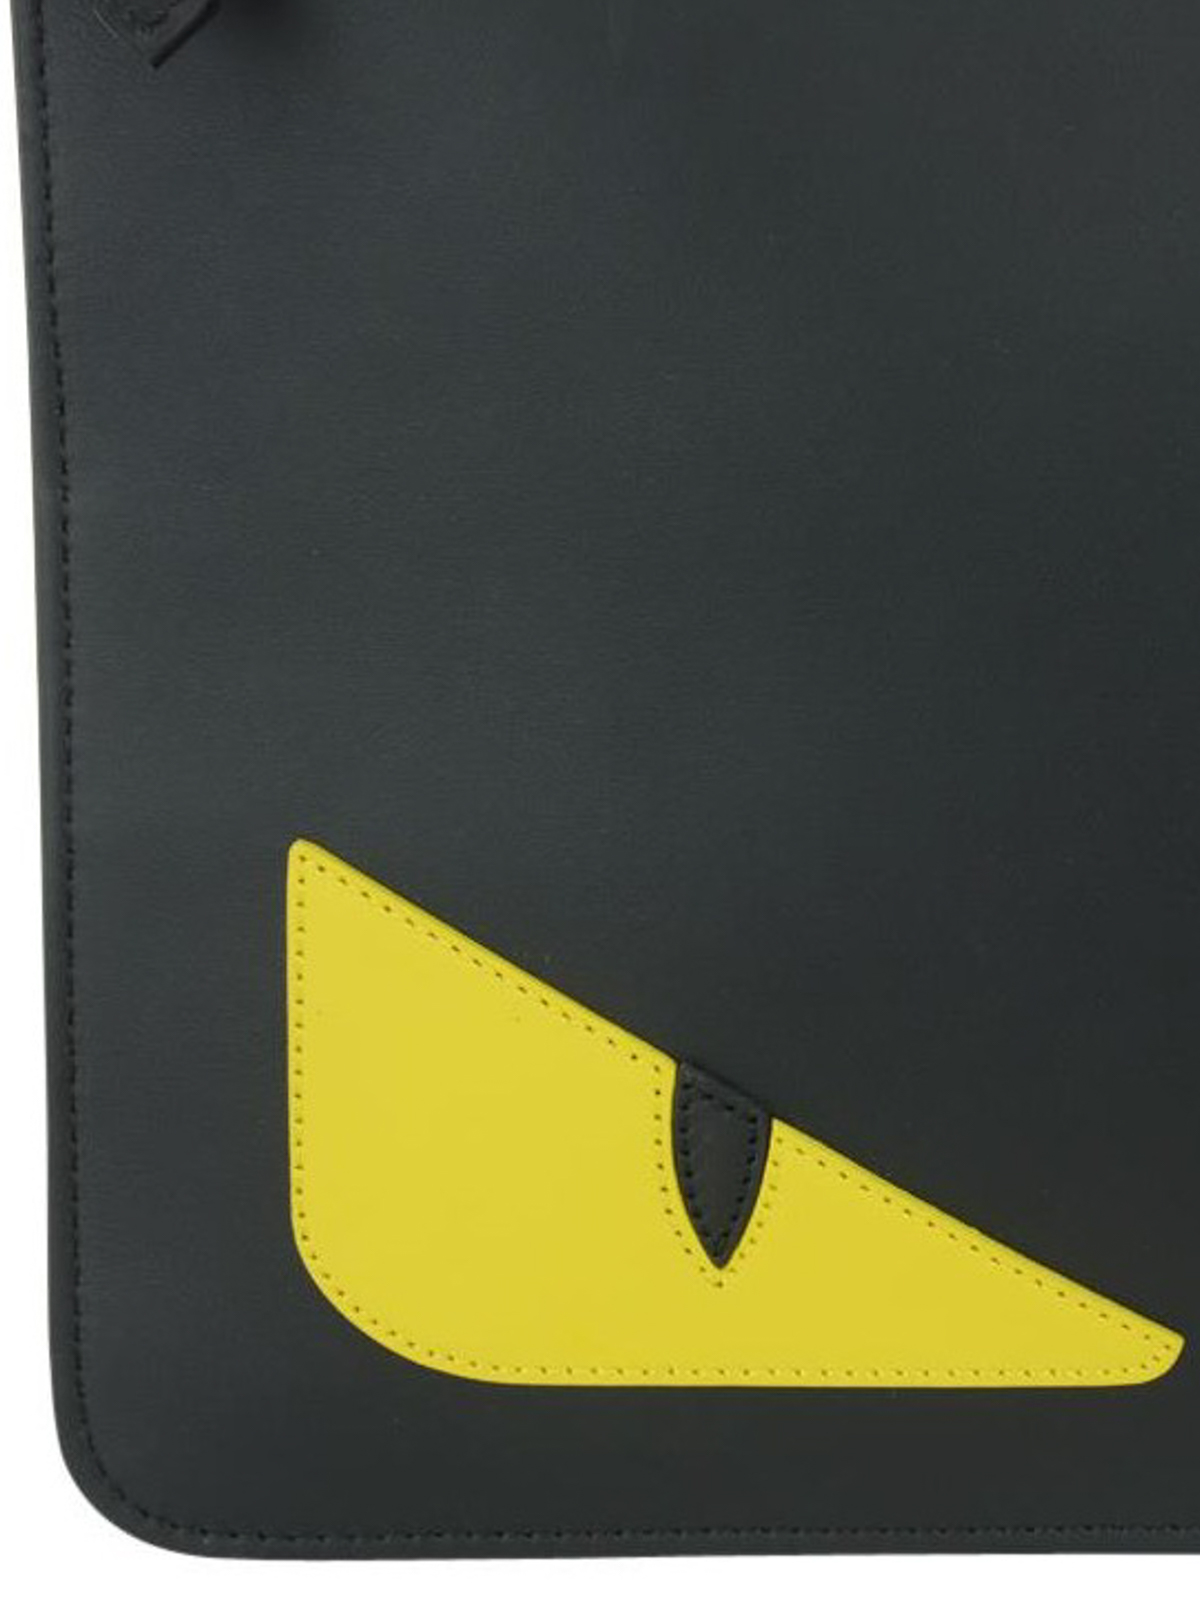 FENDI: leather clutch bag with Bag Bugs eyes - Black